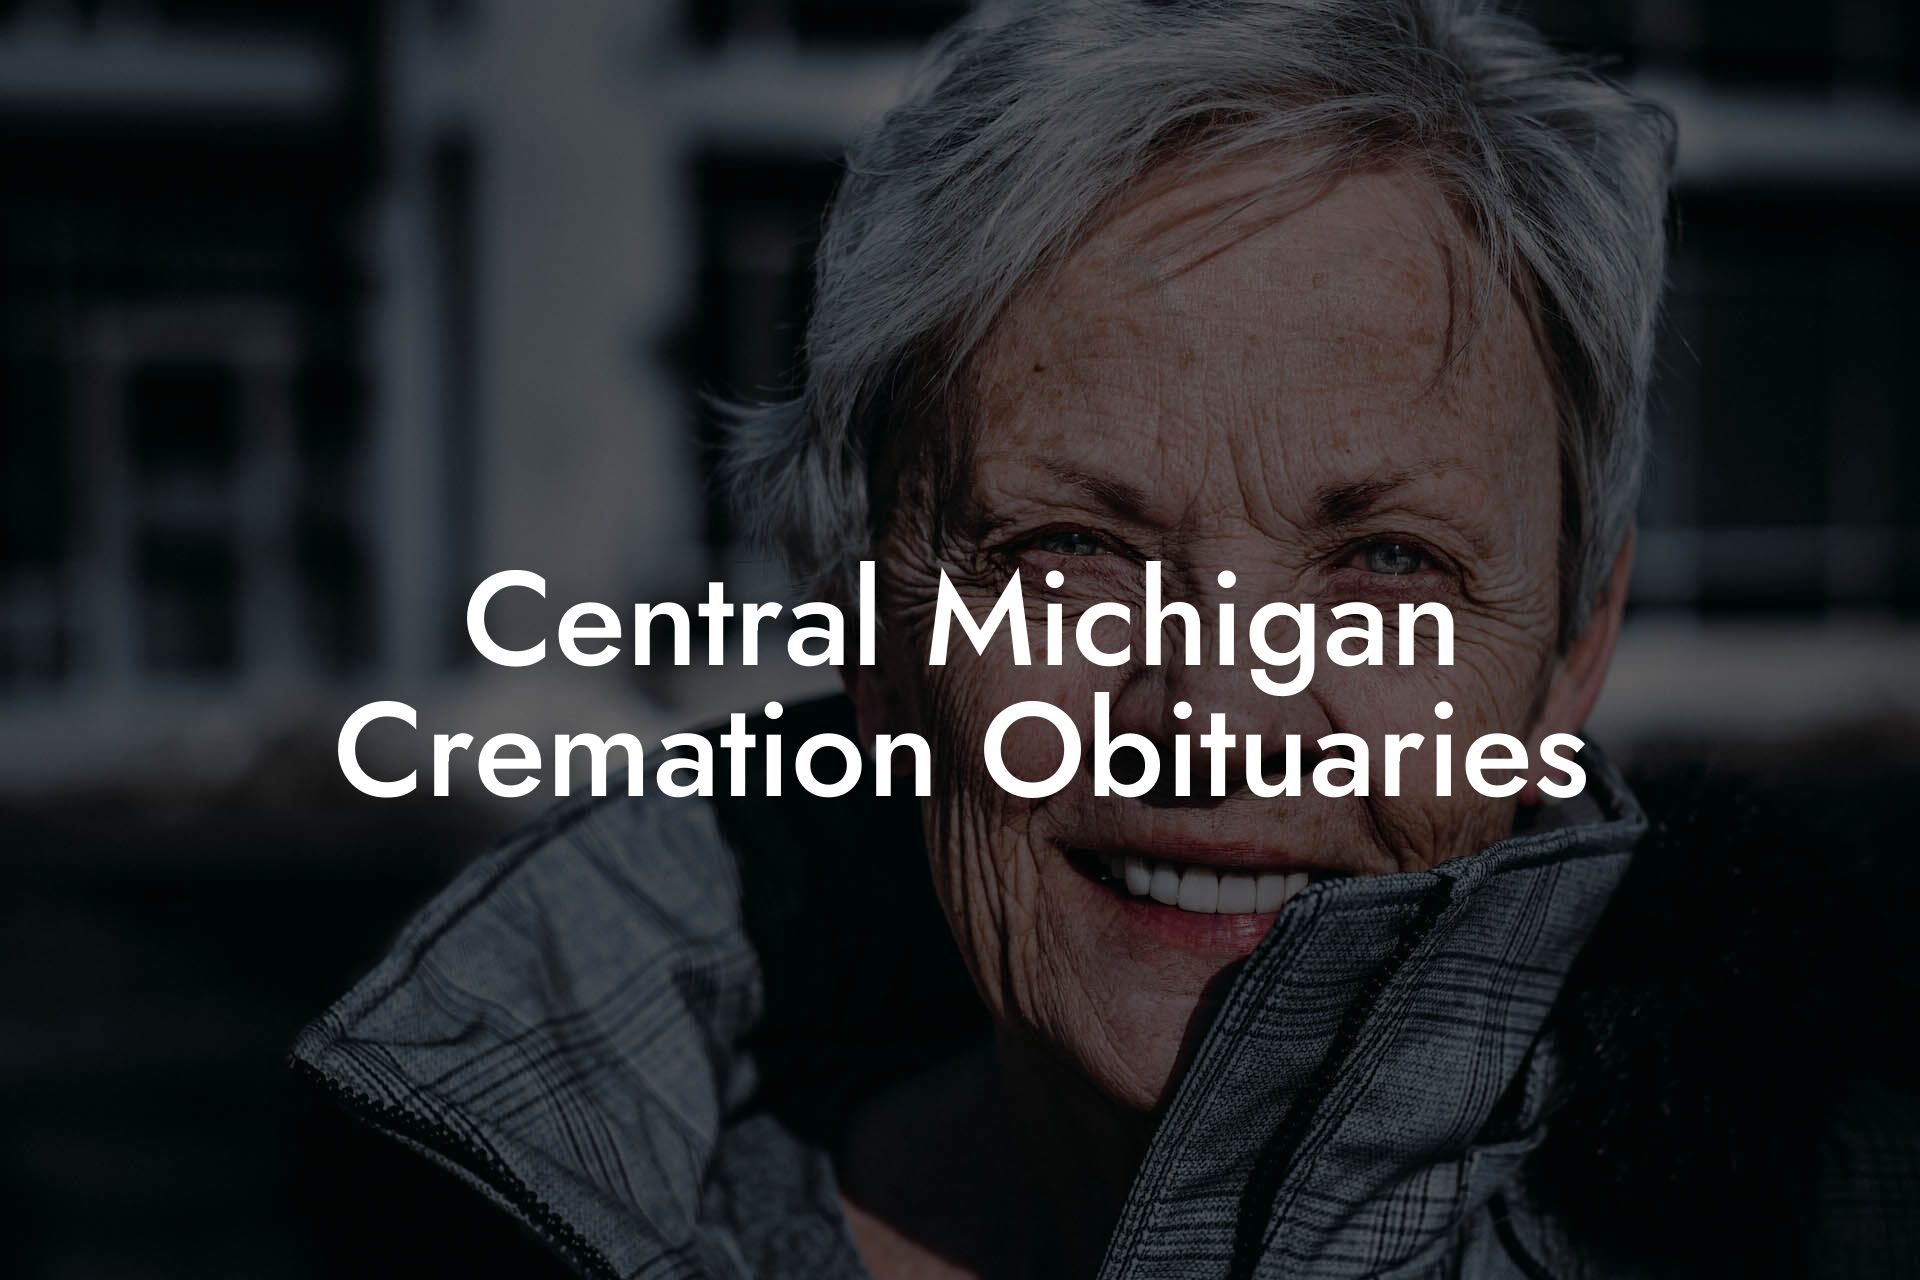 Central Michigan Cremation Obituaries